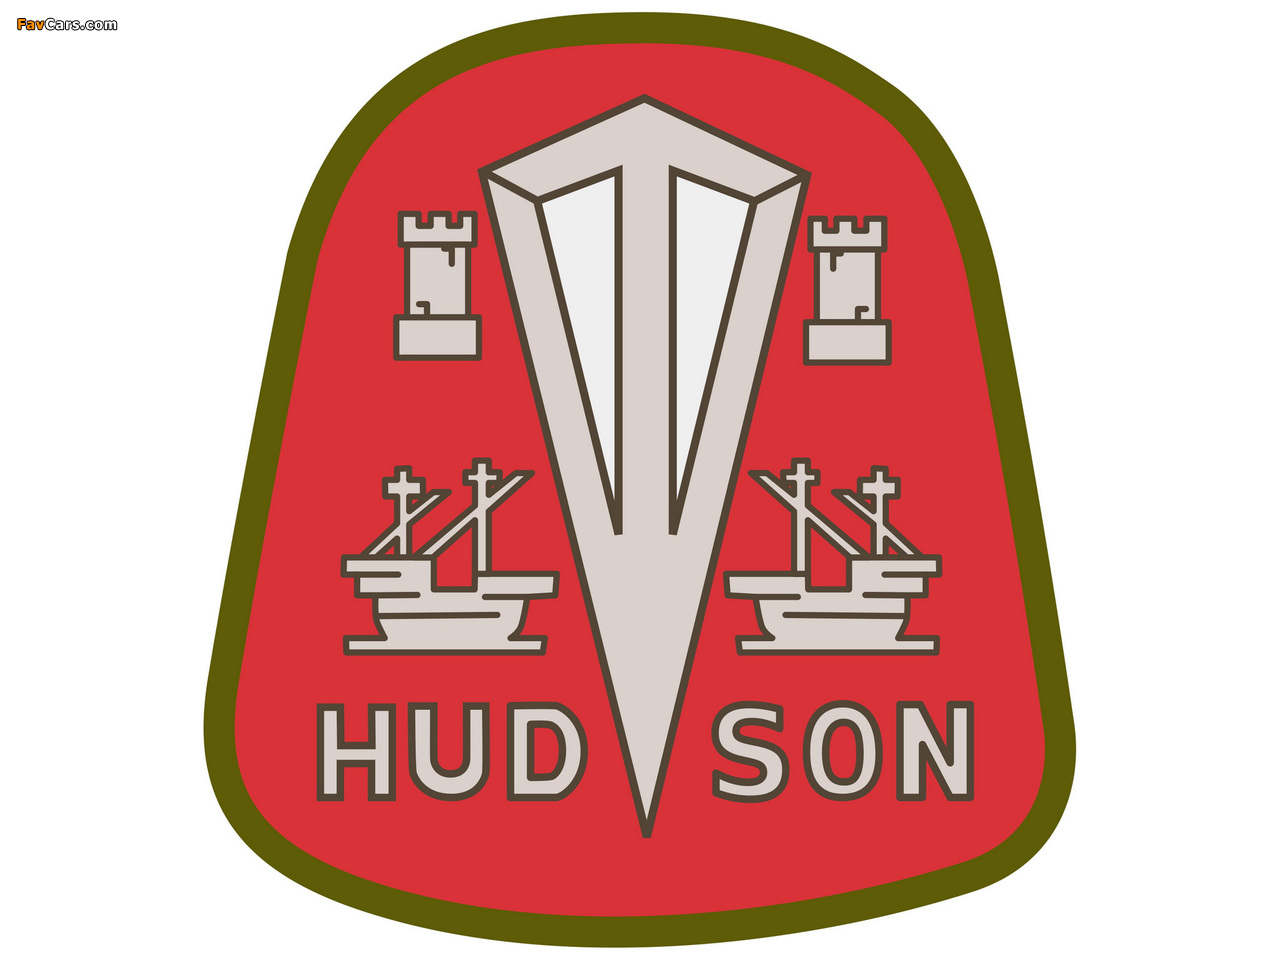 Images of Hudson (1280 x 960)